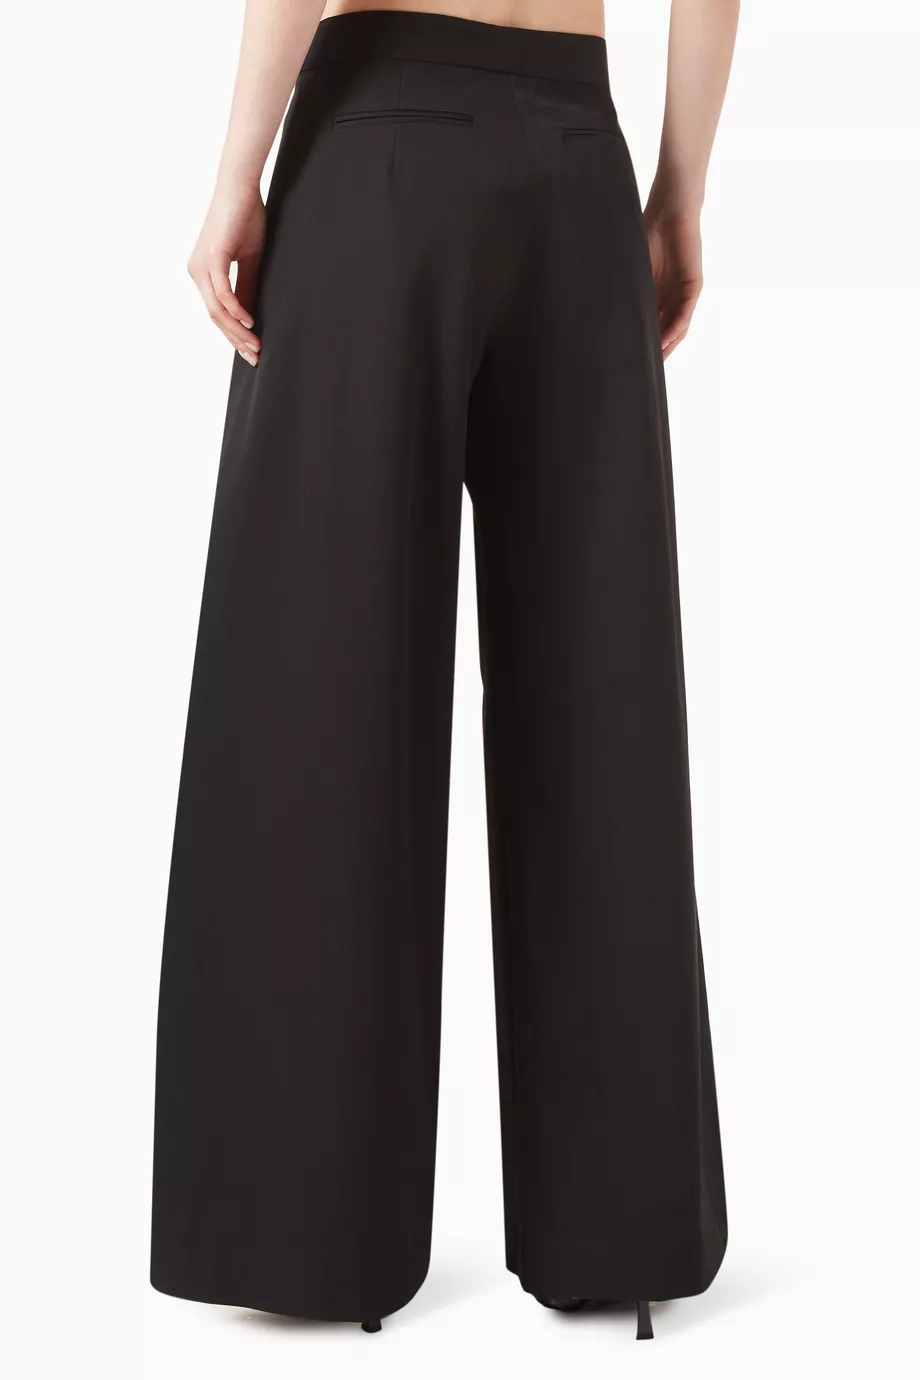 Low-rise wool-blend slim pants in black - Dolce Gabbana